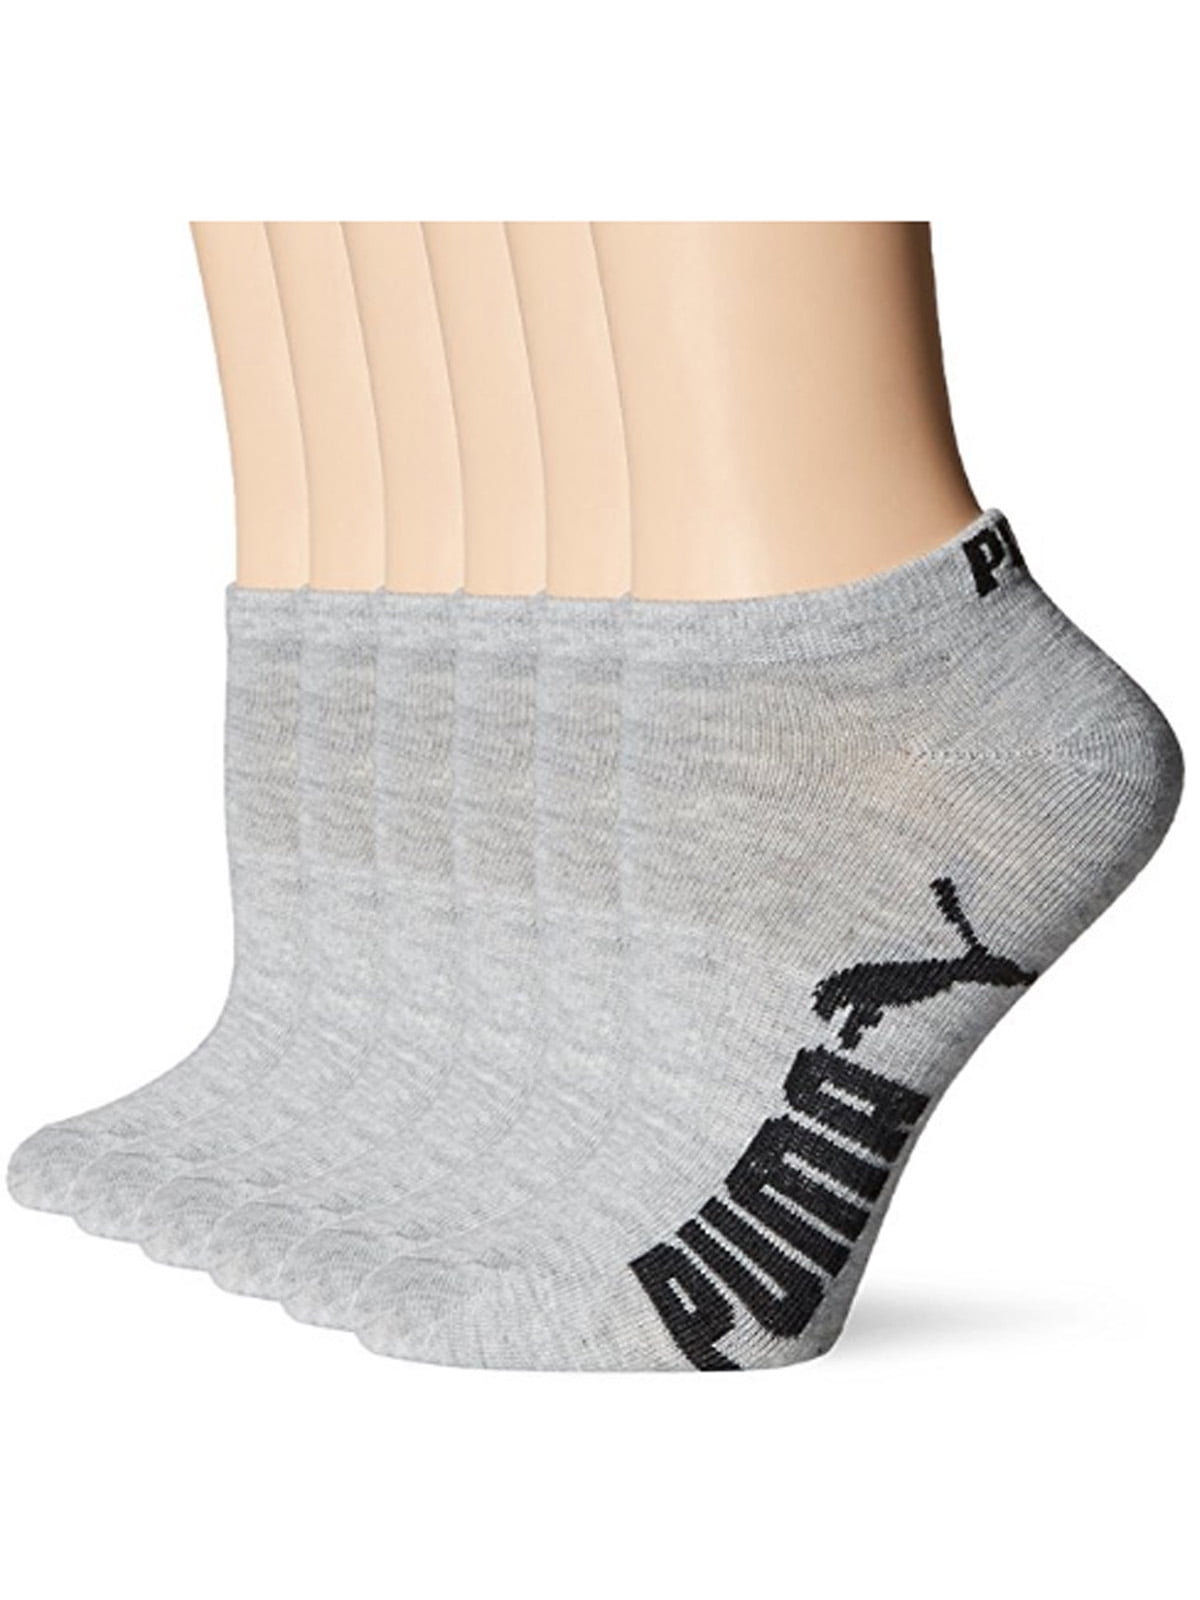 PUMA Women's 6 Pack Low Cut Socks Medium Grey - Walmart.com